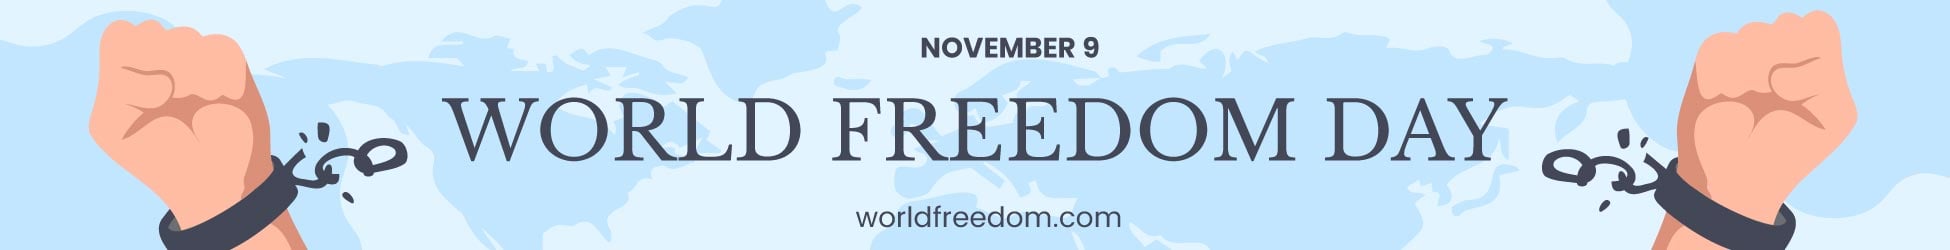 World Freedom Day Website Banner in Illustrator, PSD, EPS, SVG, JPG, PNG